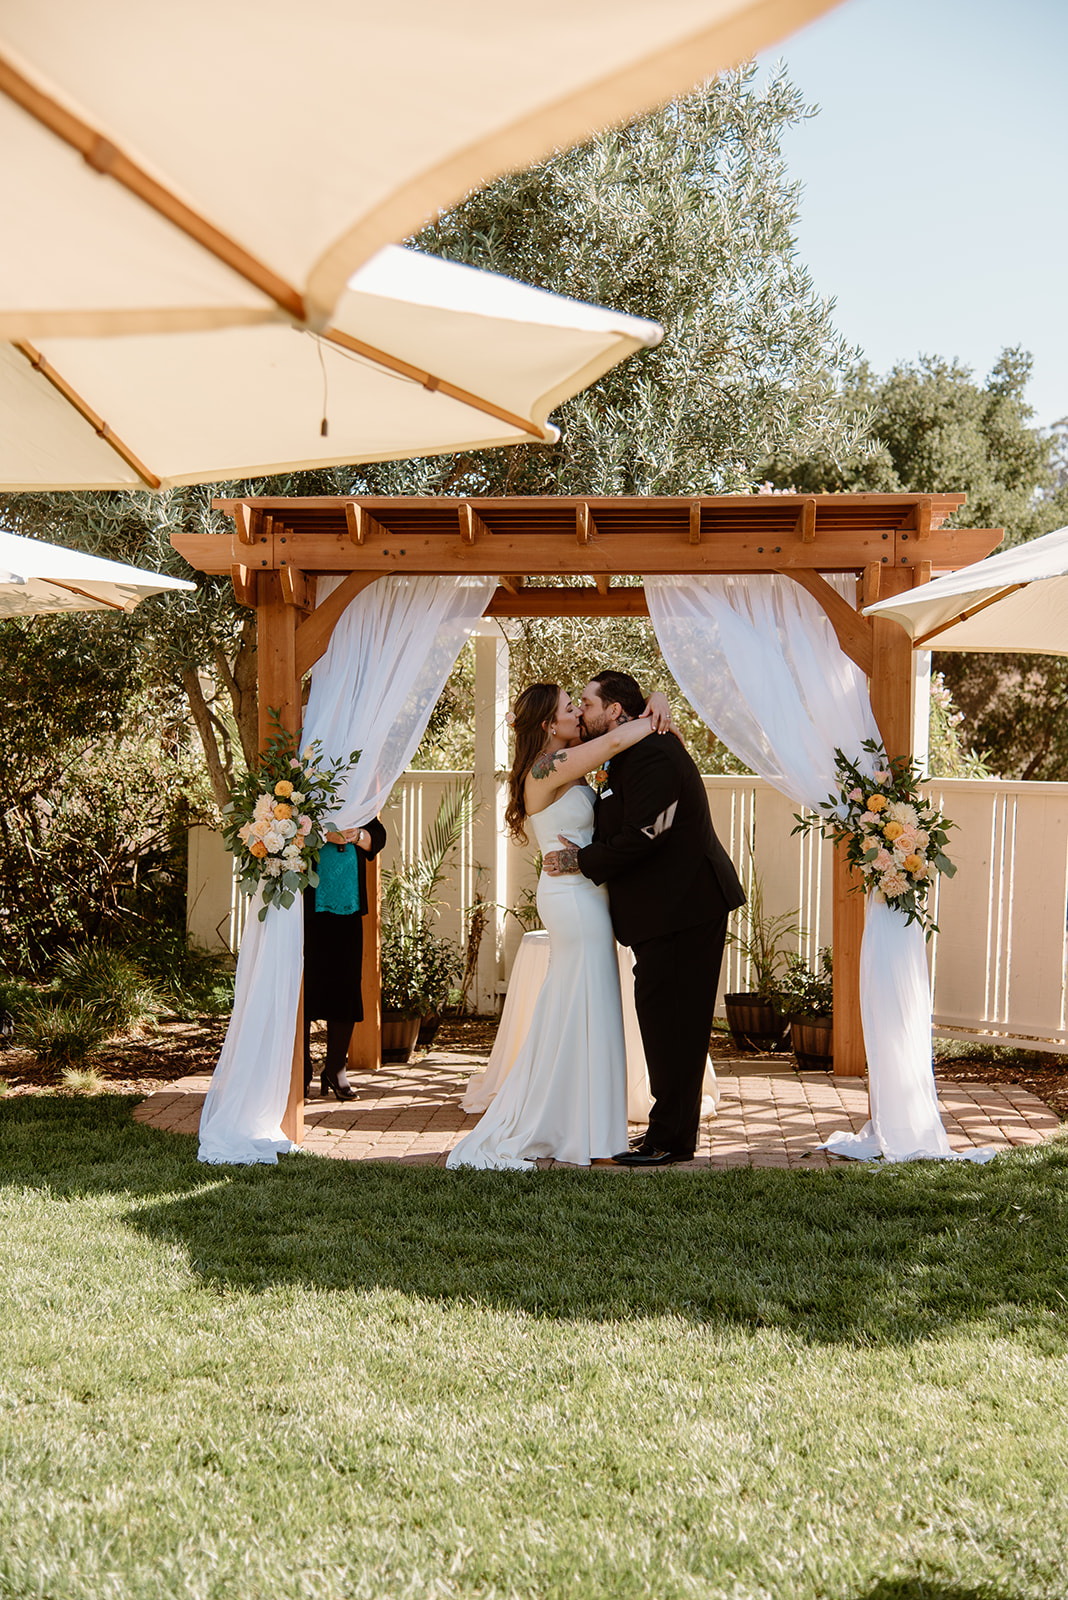 Sydney Jai Photography - Petaluma wedding, wedding ceremony, first kiss